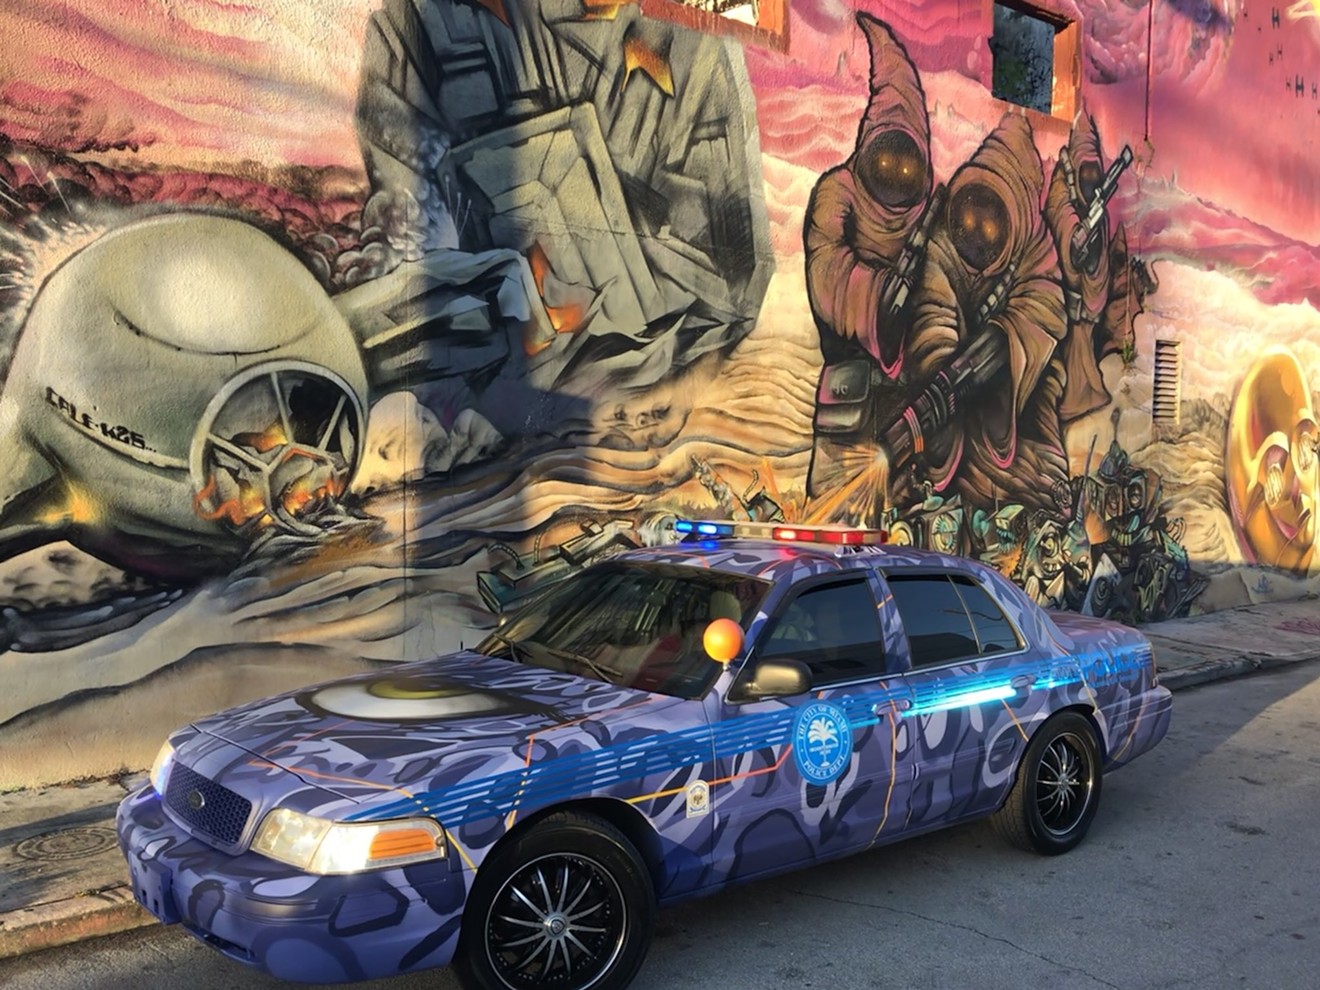 Miami Police's Wynwood graffiti car